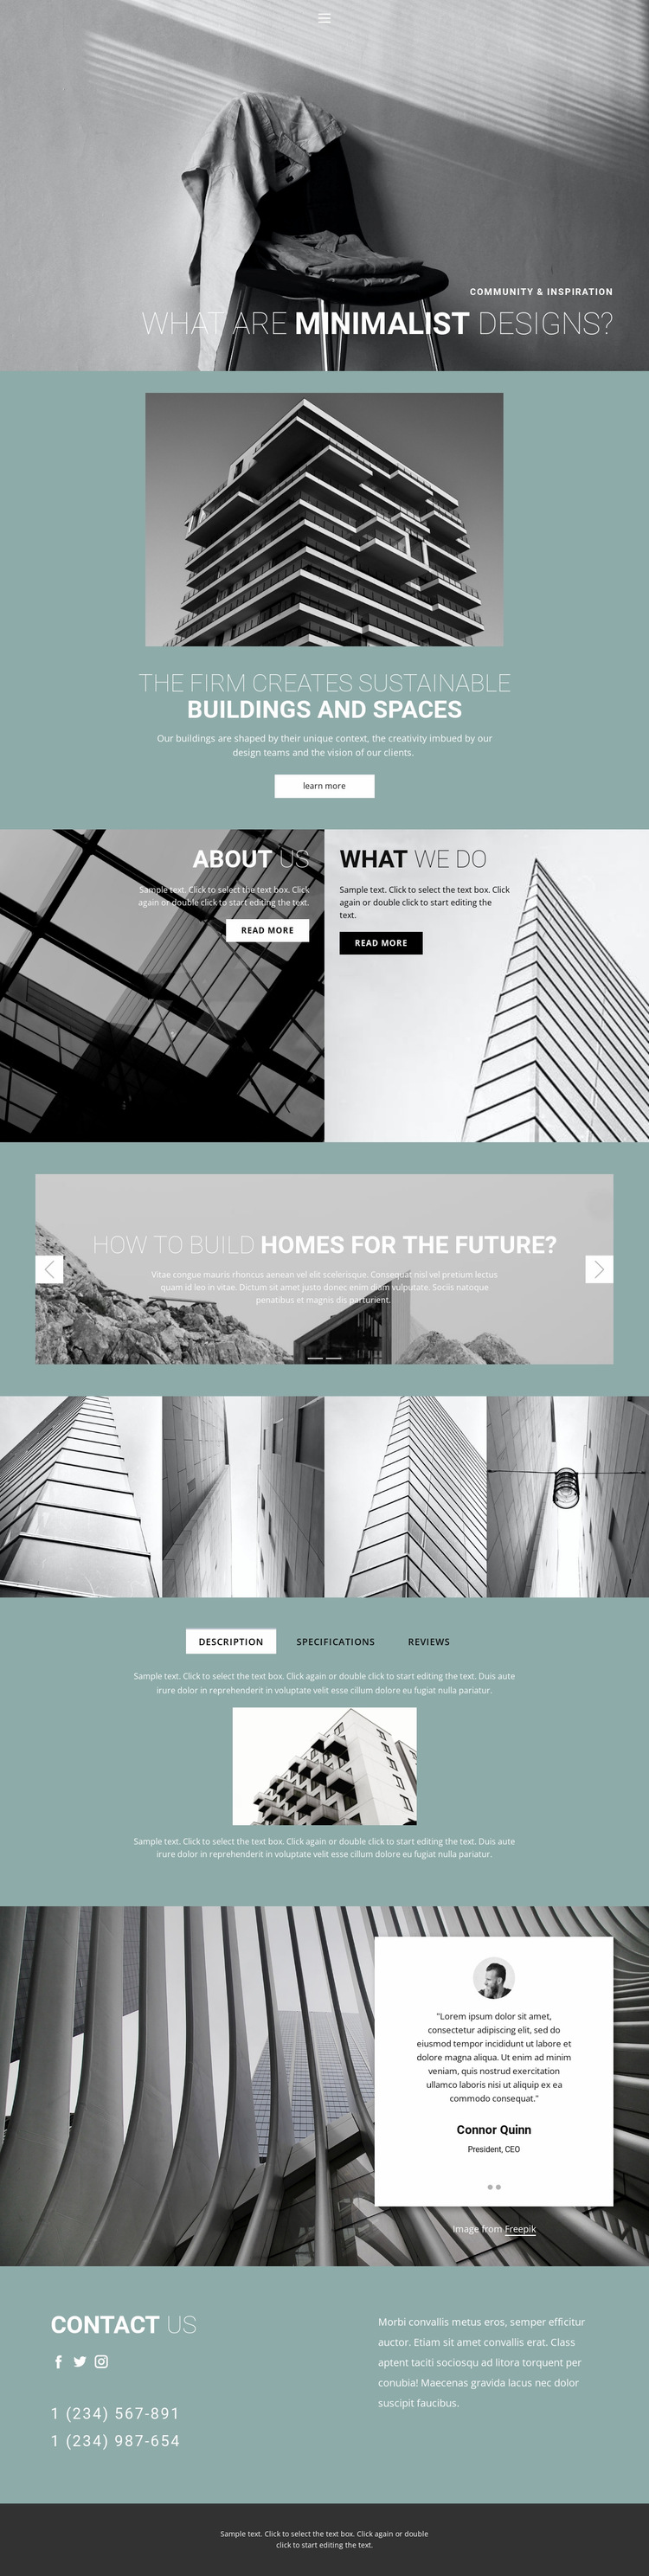 Perfect architecture ideas Website Builder Templates